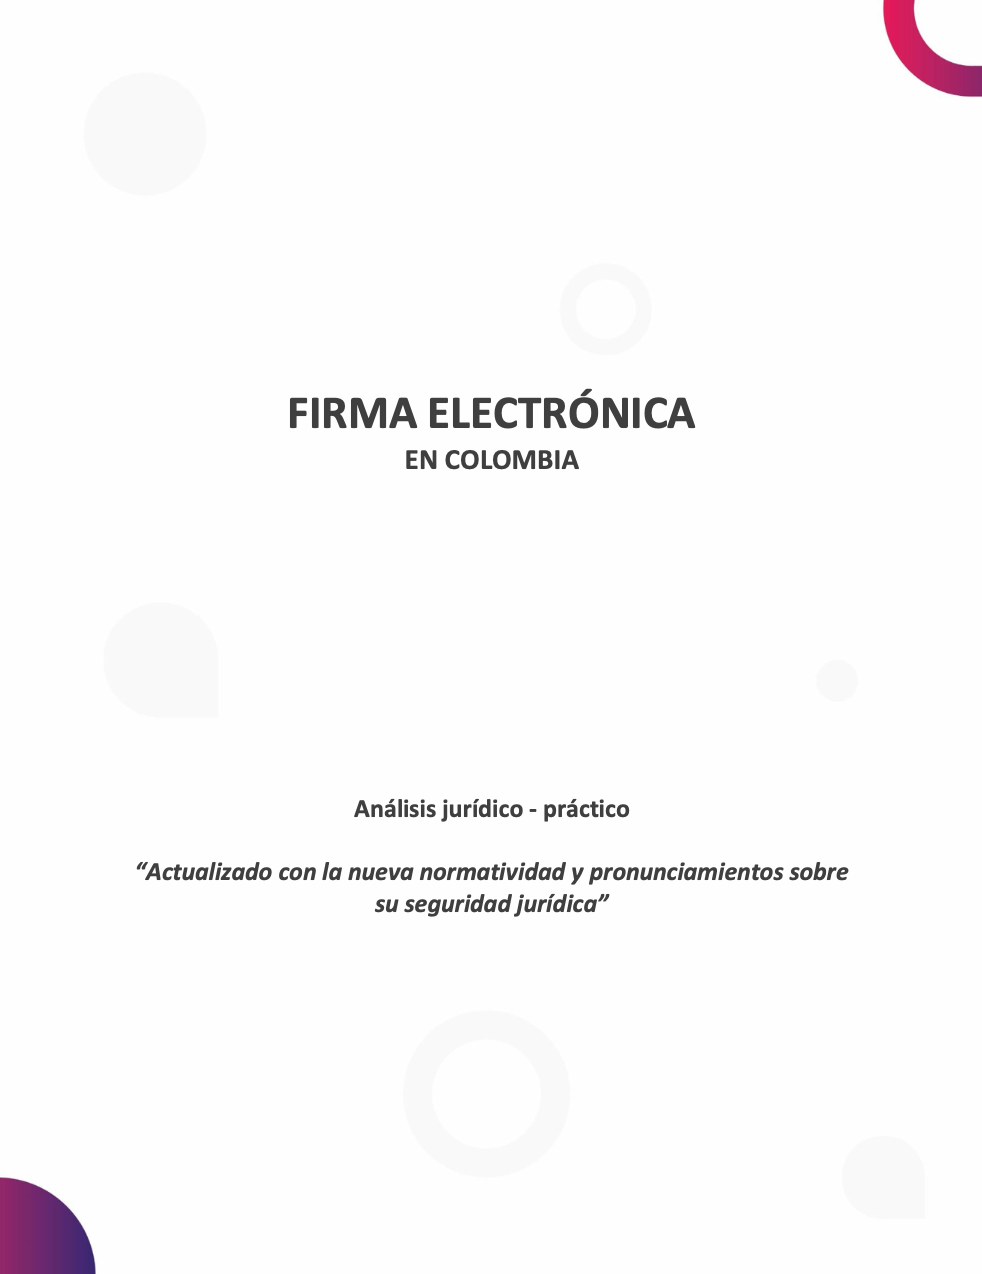 Firma Electrónica en Colombia 2021